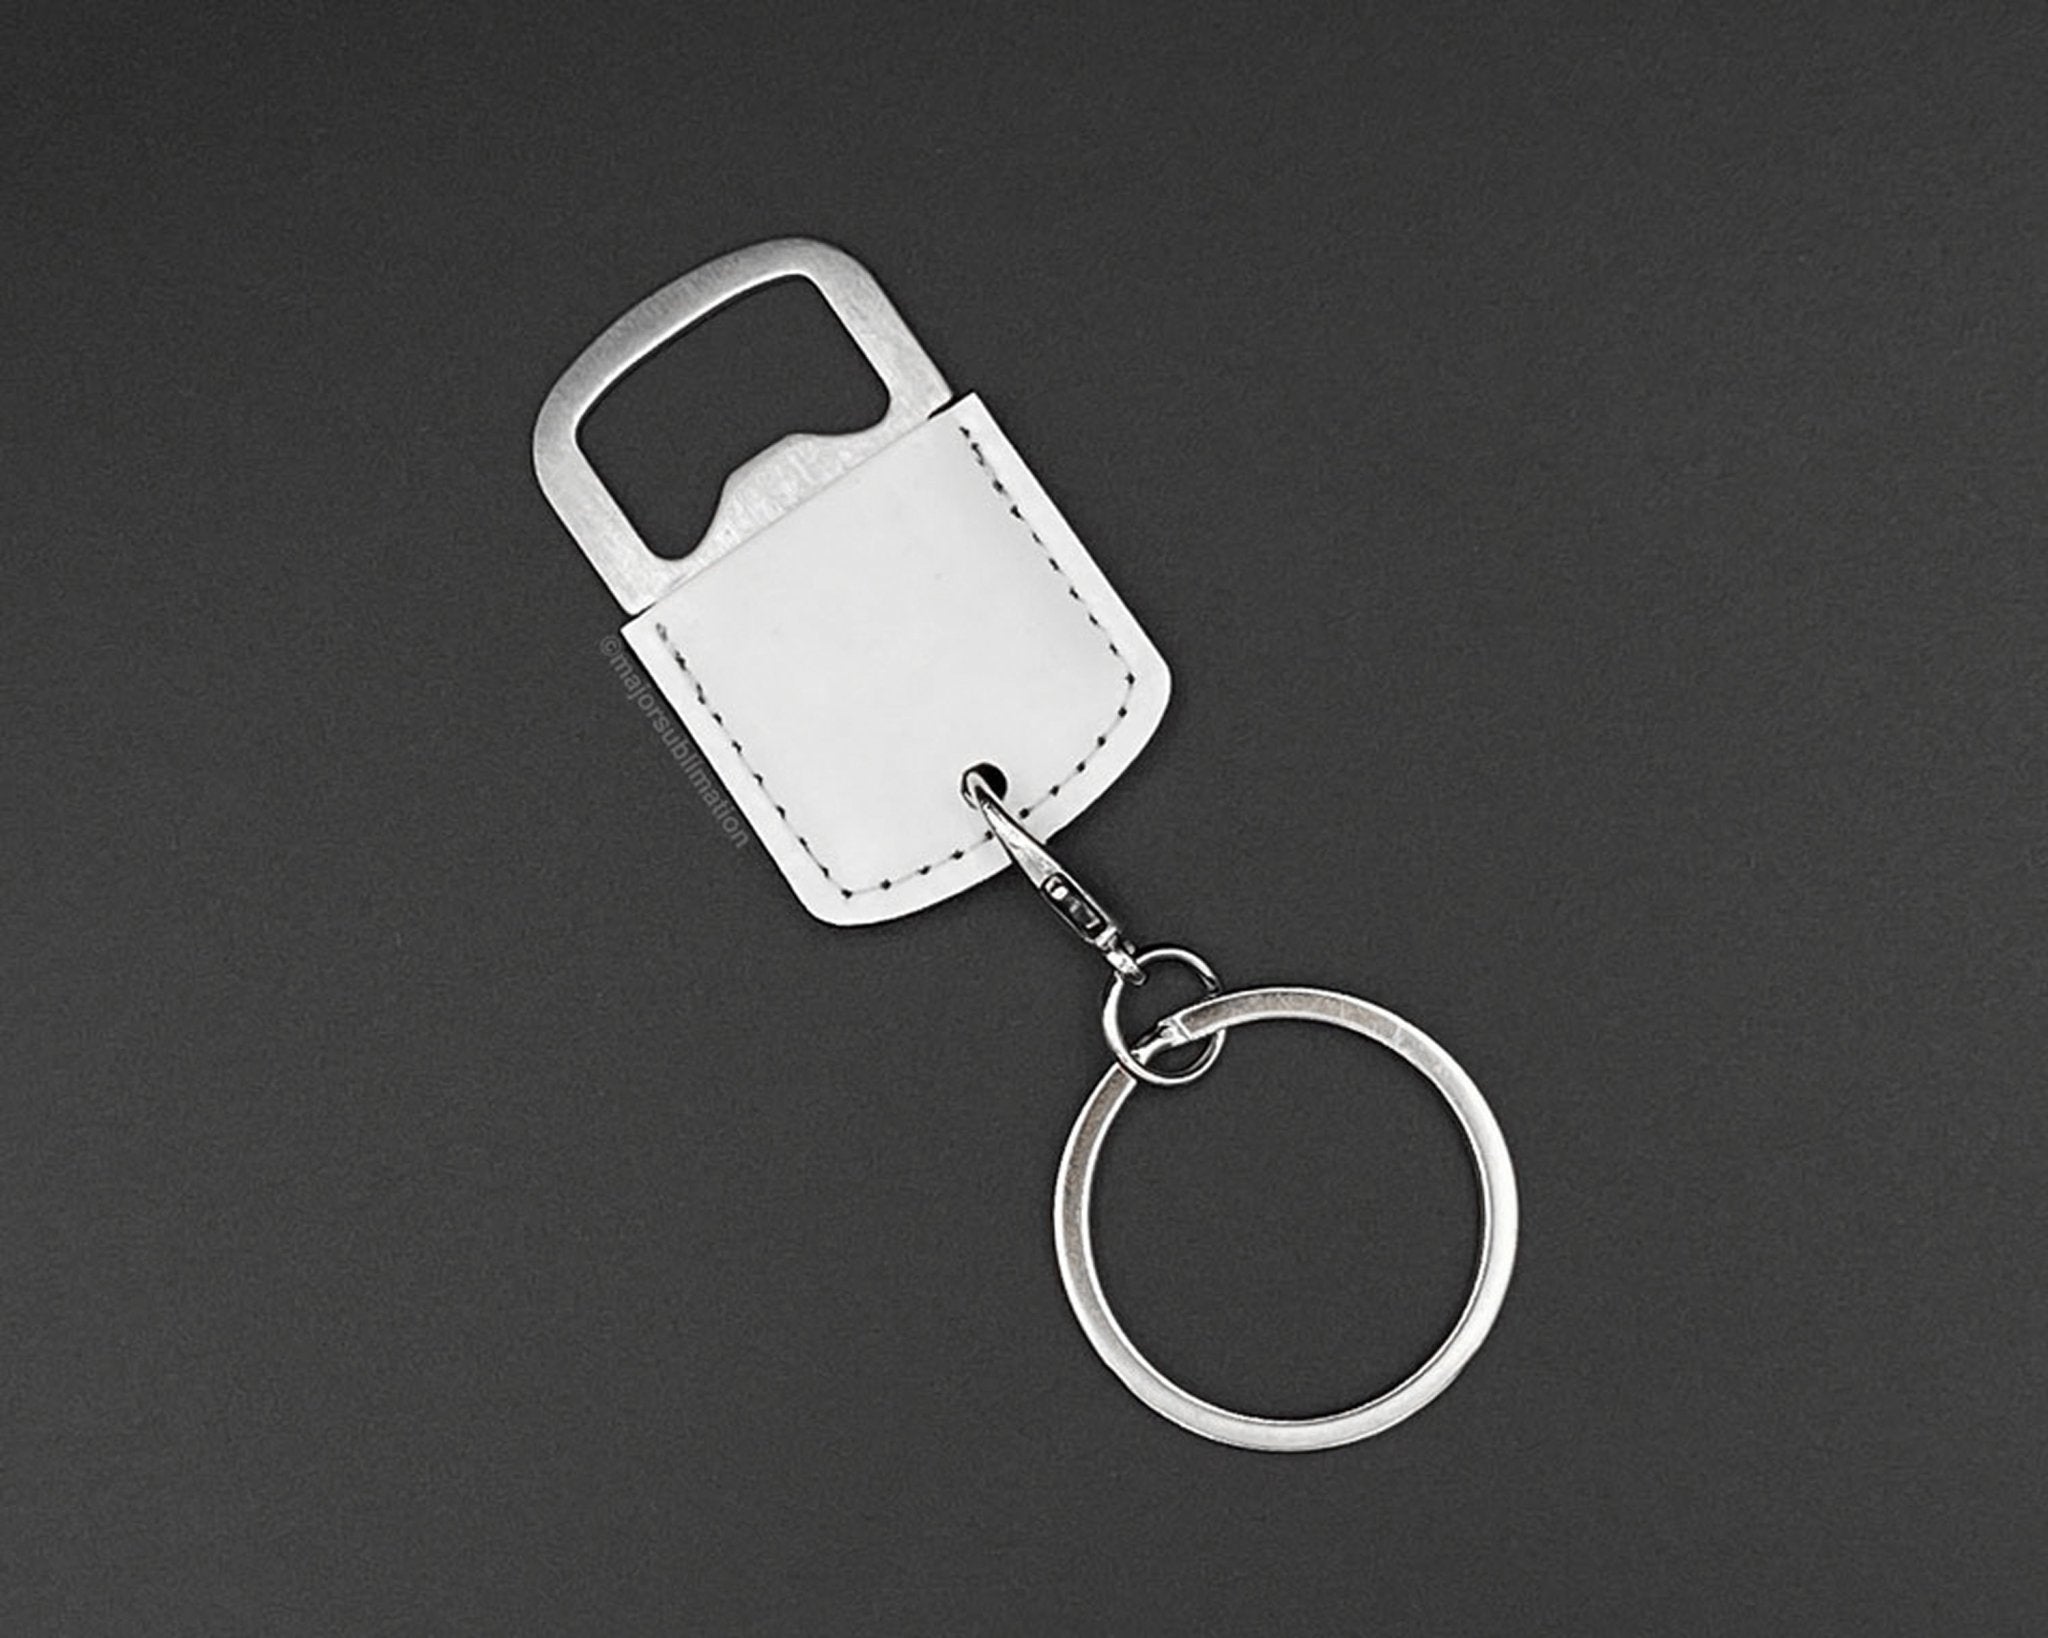 Acrylic keychain for sublimation keys - a puzzle